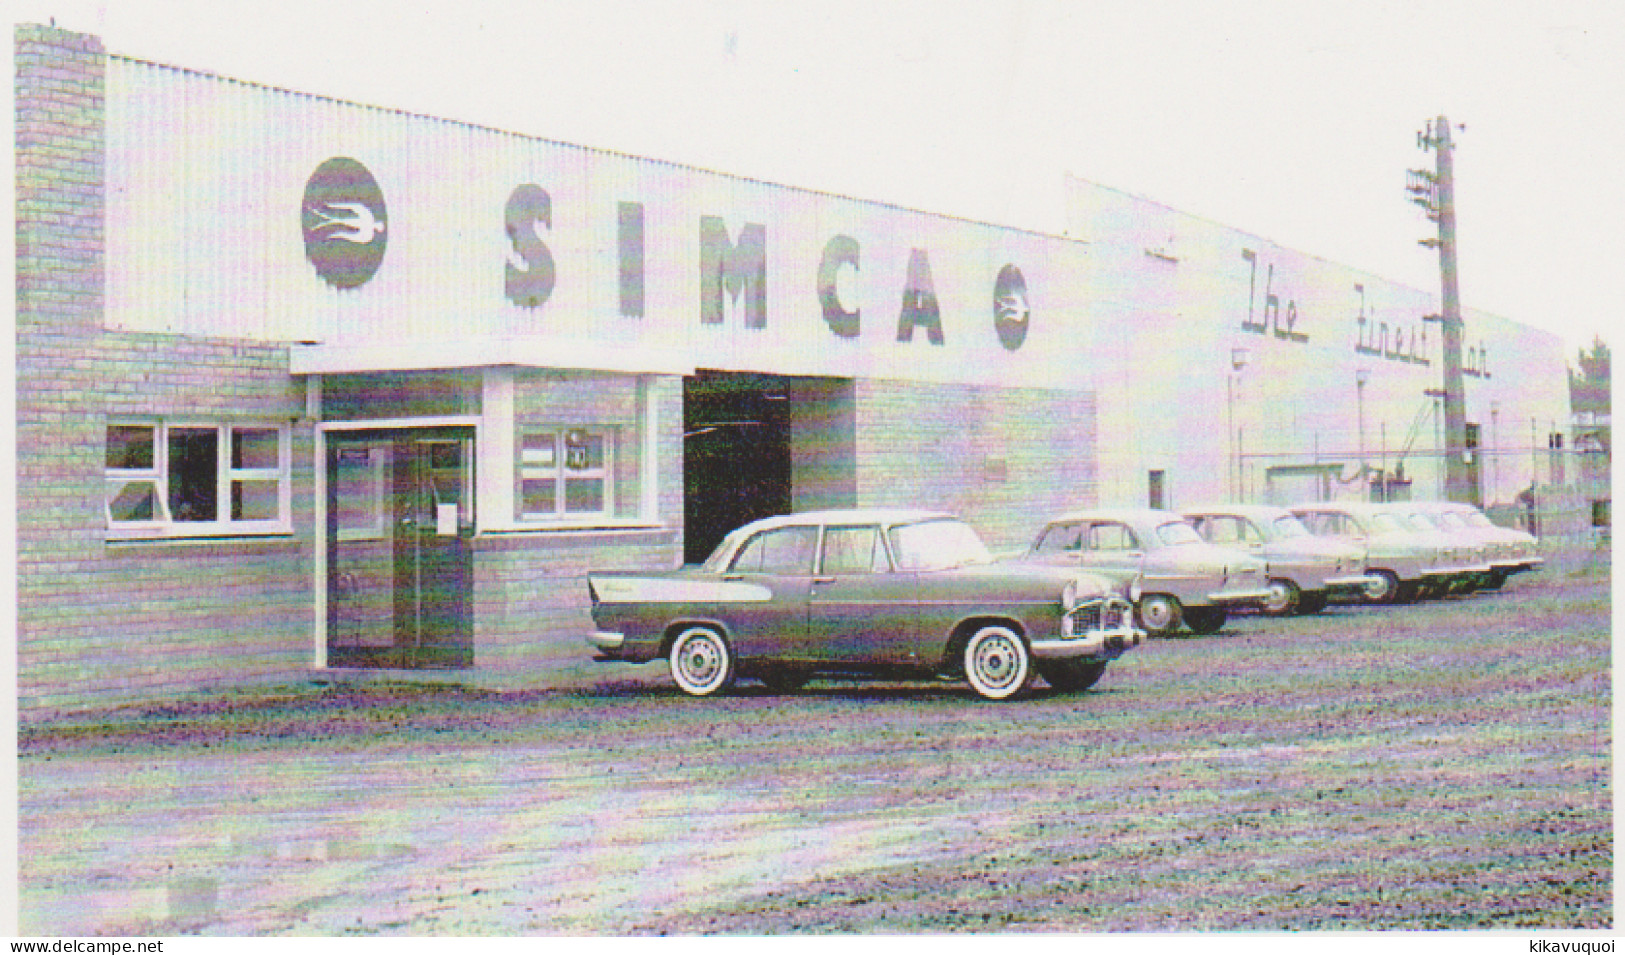 SIMCA GARAGE 1961 - CARTE POSTALE 10X15 CM NEUF - PKW